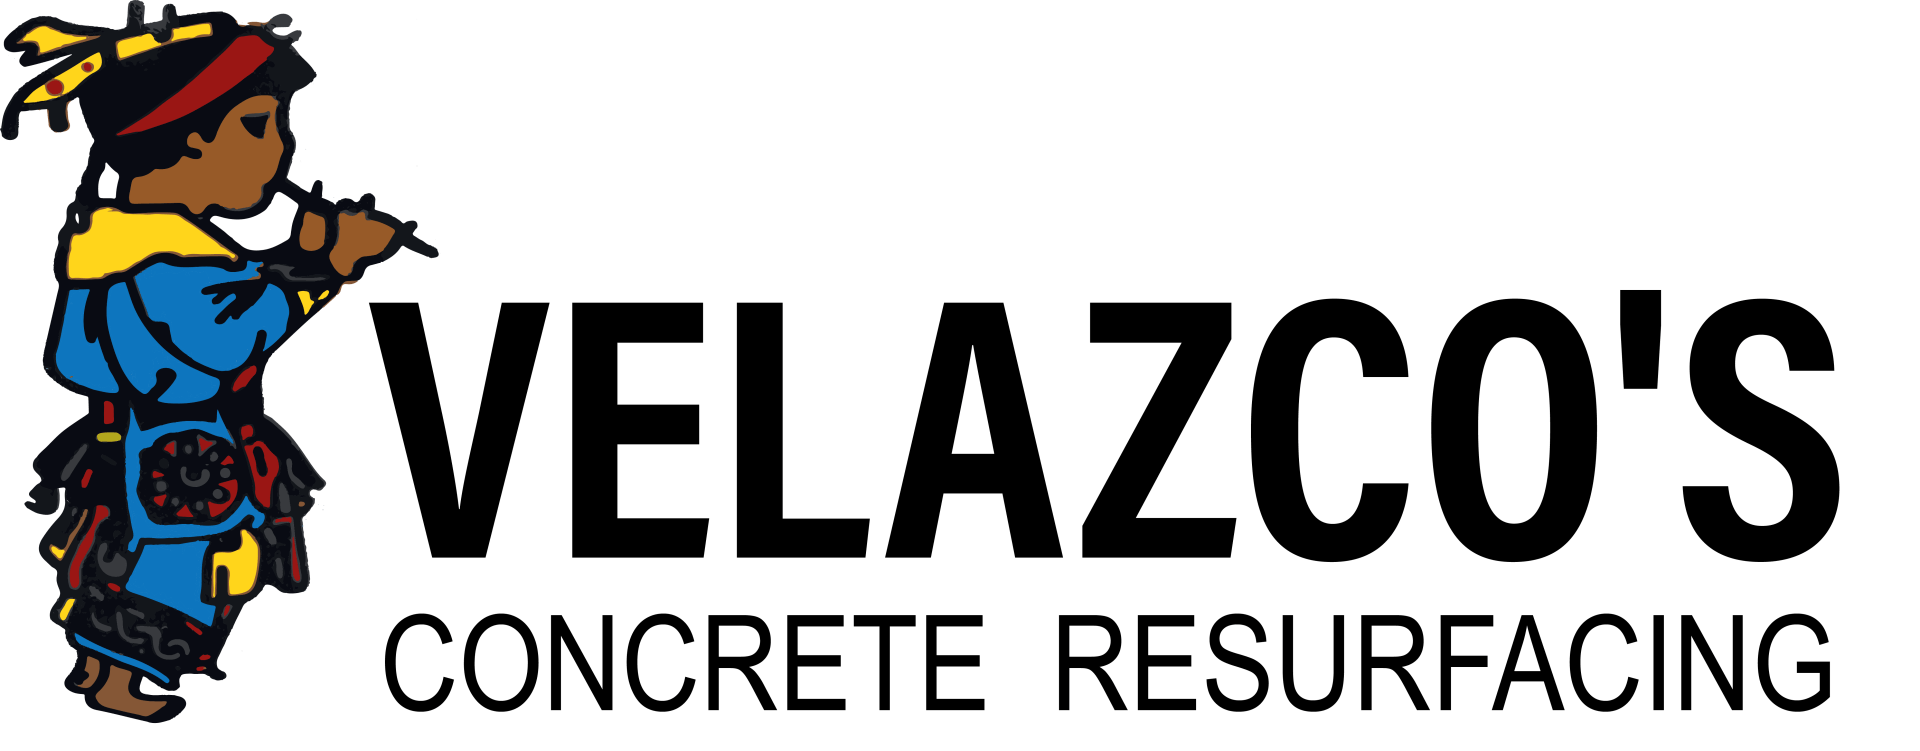 Velazco's Concrete Resurfacing Logo